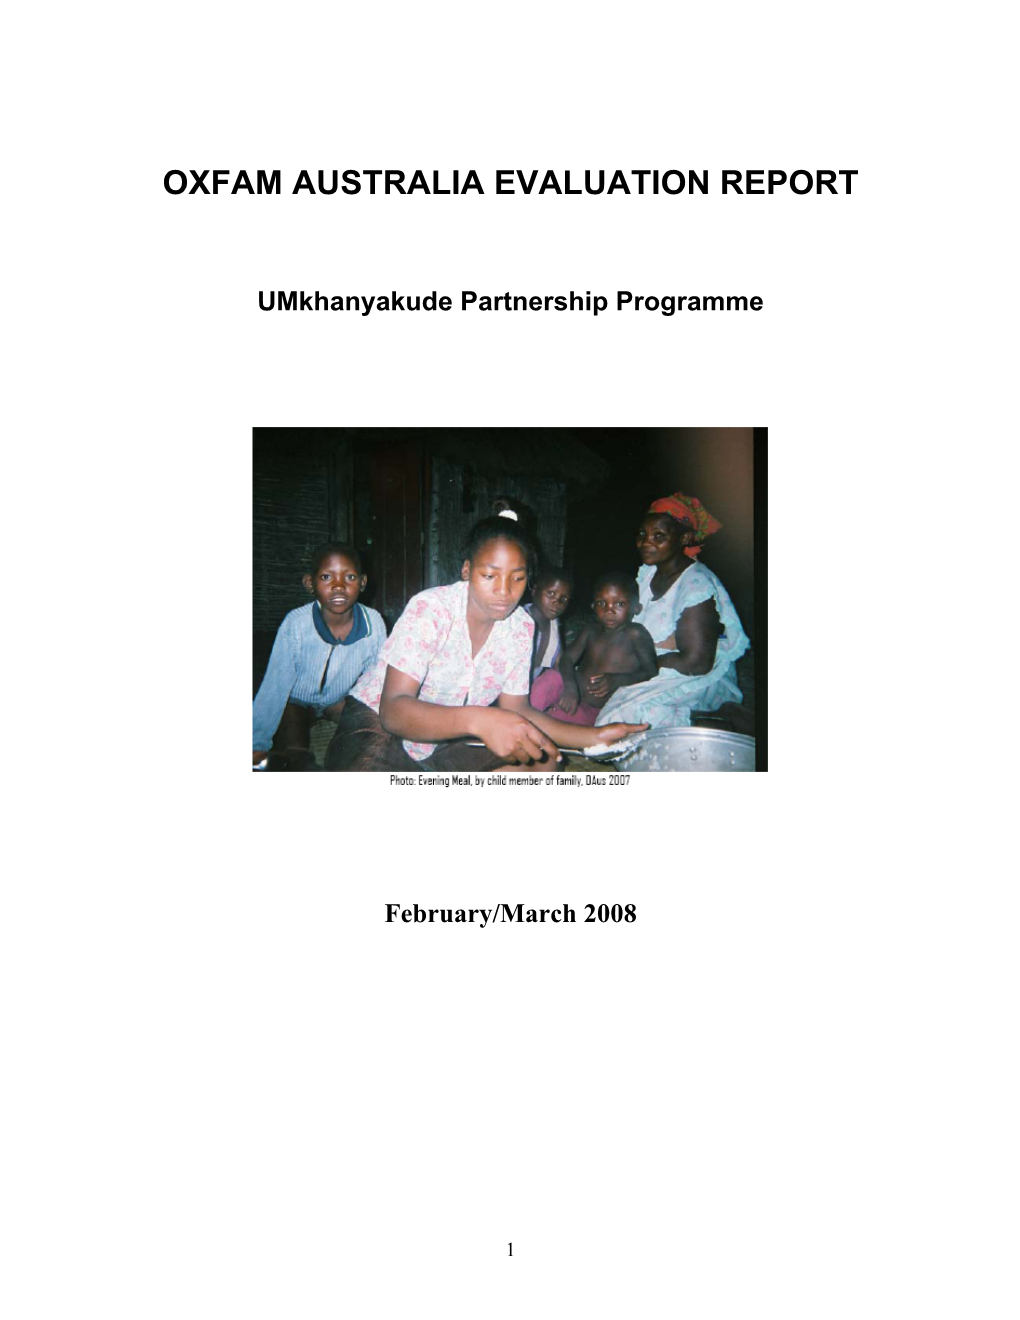 Oxfam Australia Evaluation Report: Umkhanyakude